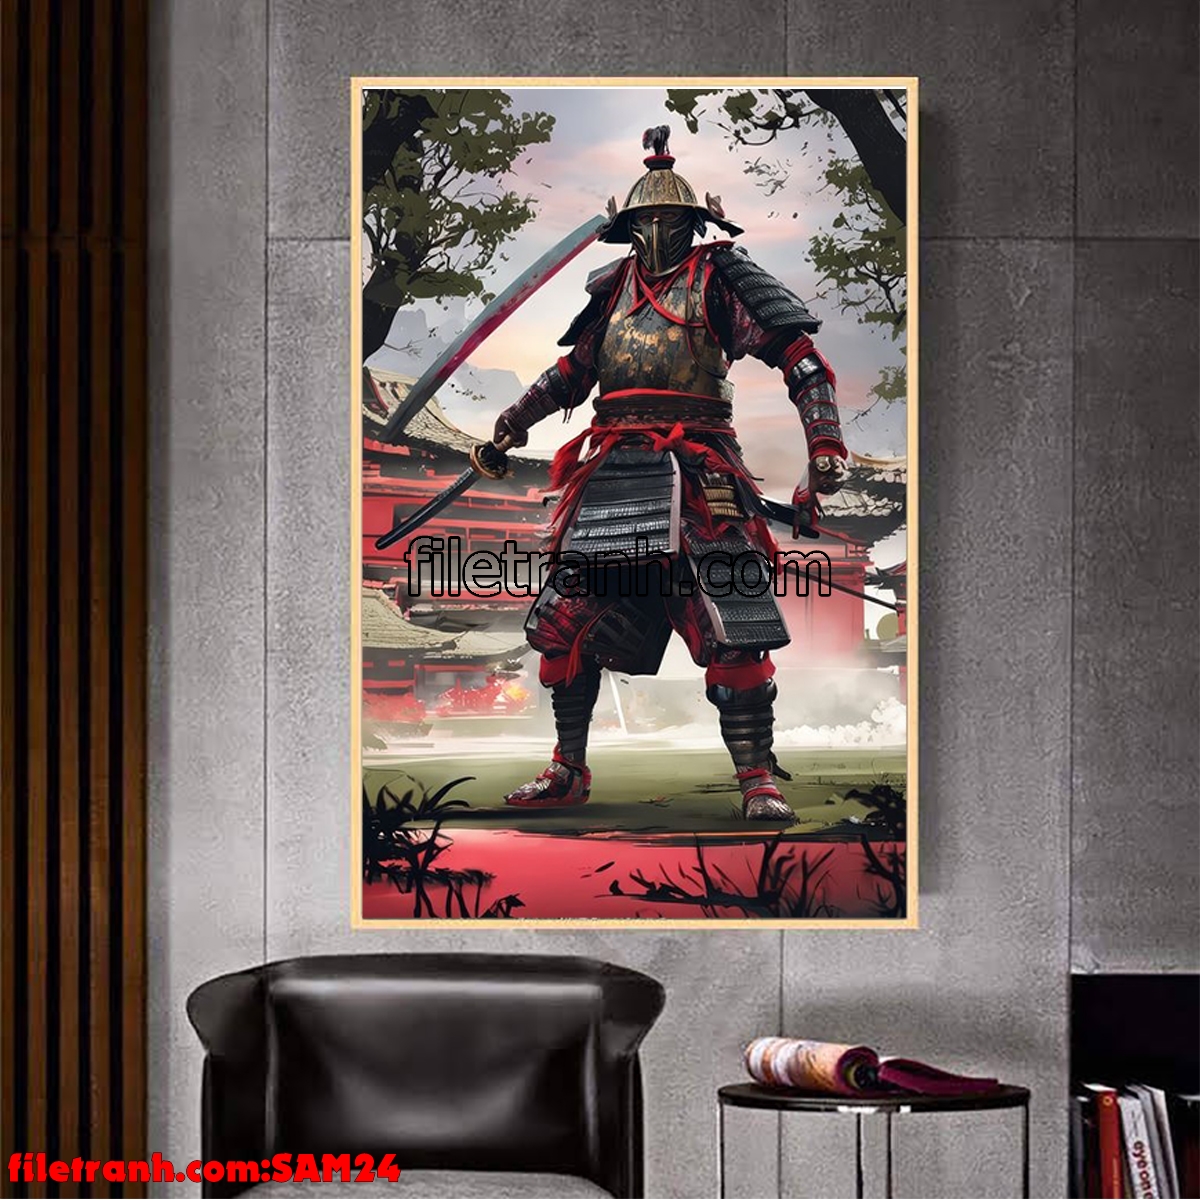 https://filetranh.com/tuong-nen/file-tranh-samurai-vo-si-nhat-ban-sam24.html